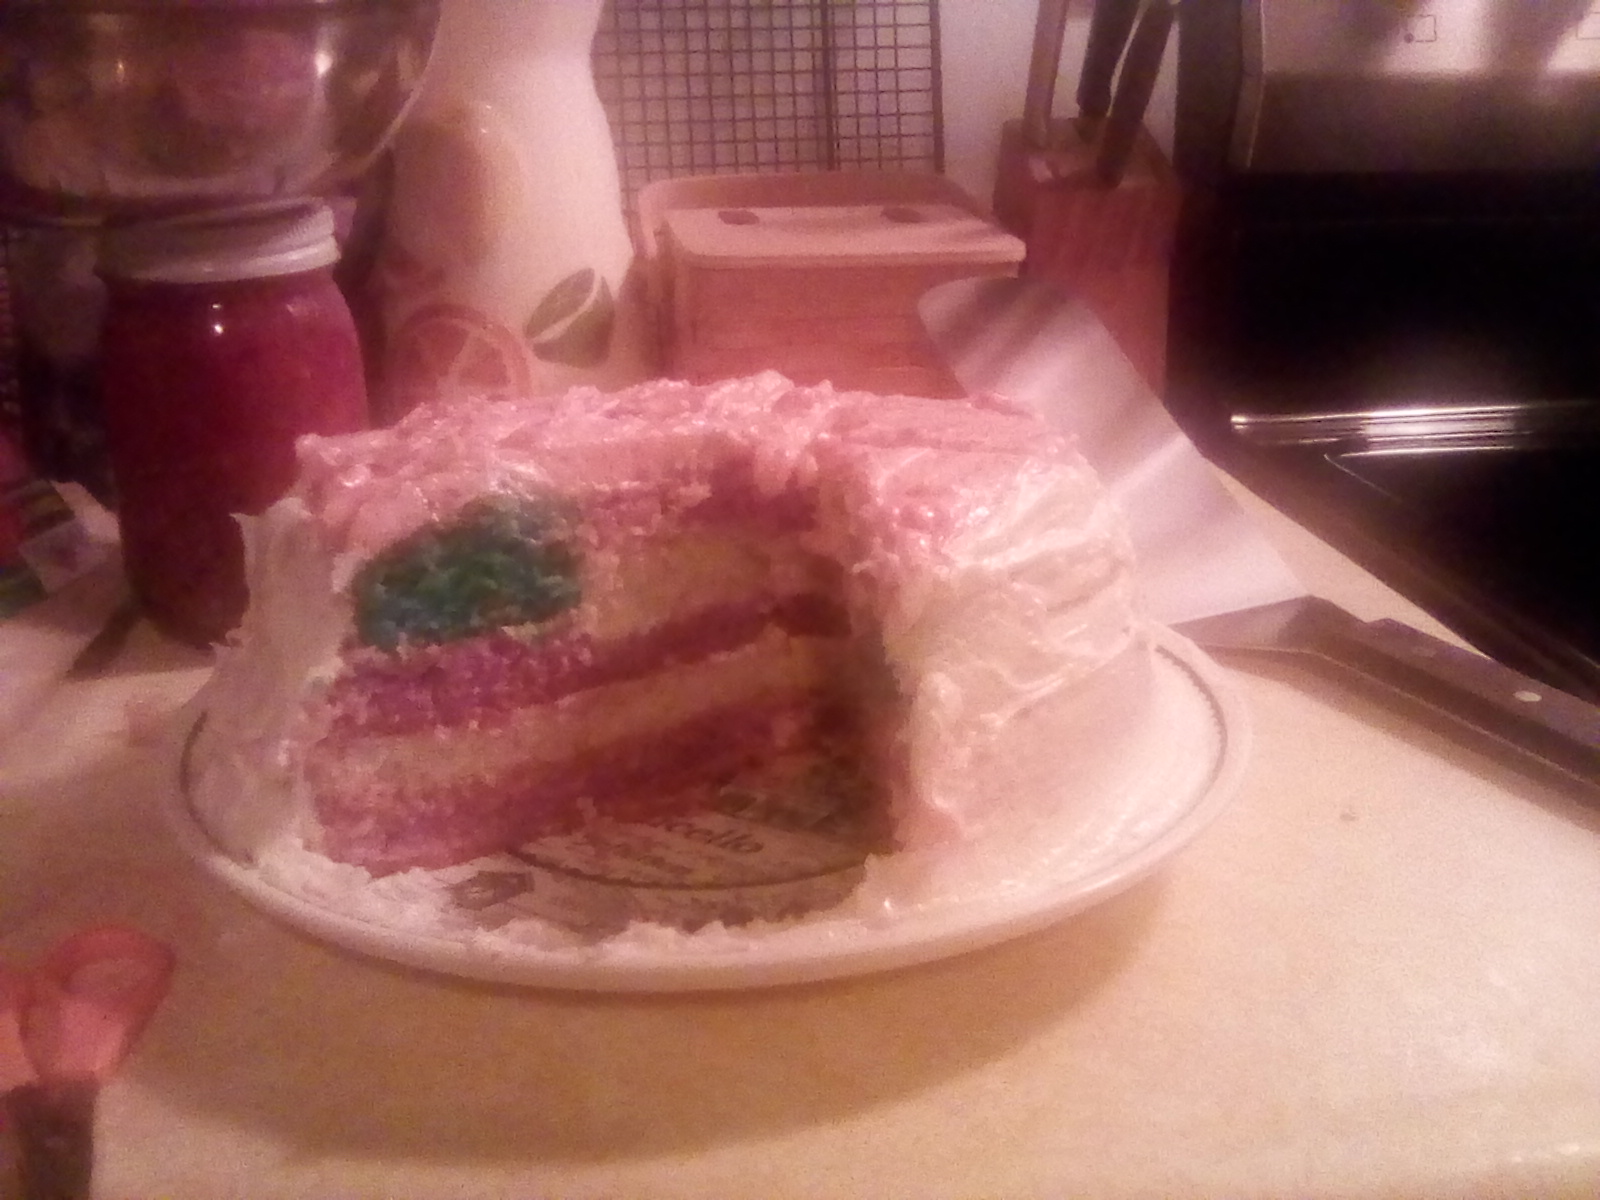 American Flag Cake 